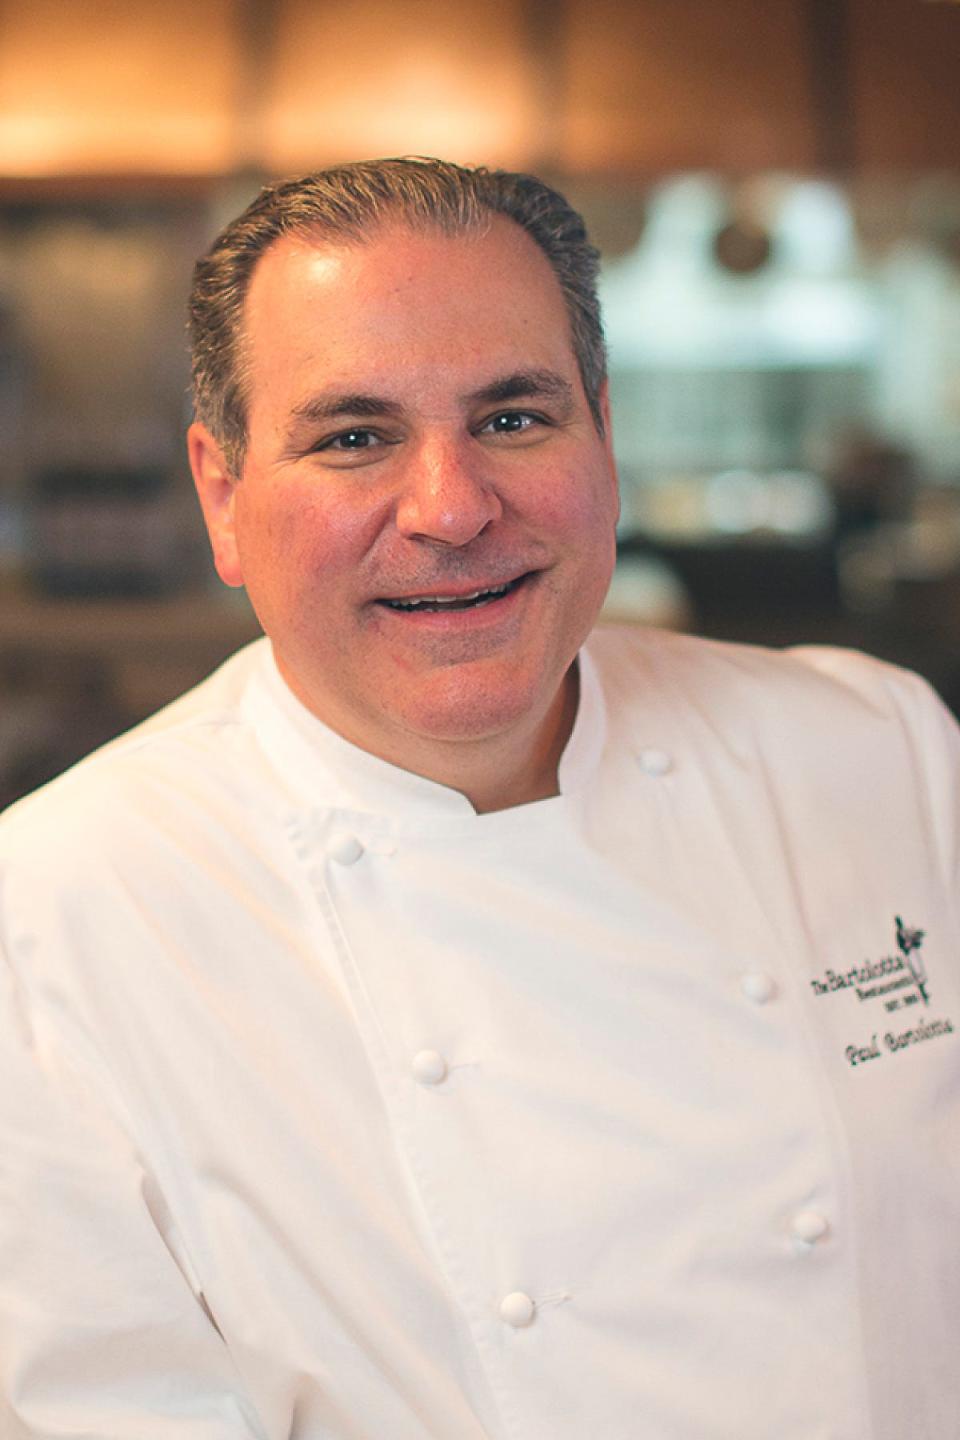 Paul Bartolotta is chef/owner of Bartolotta Restaurant Group.